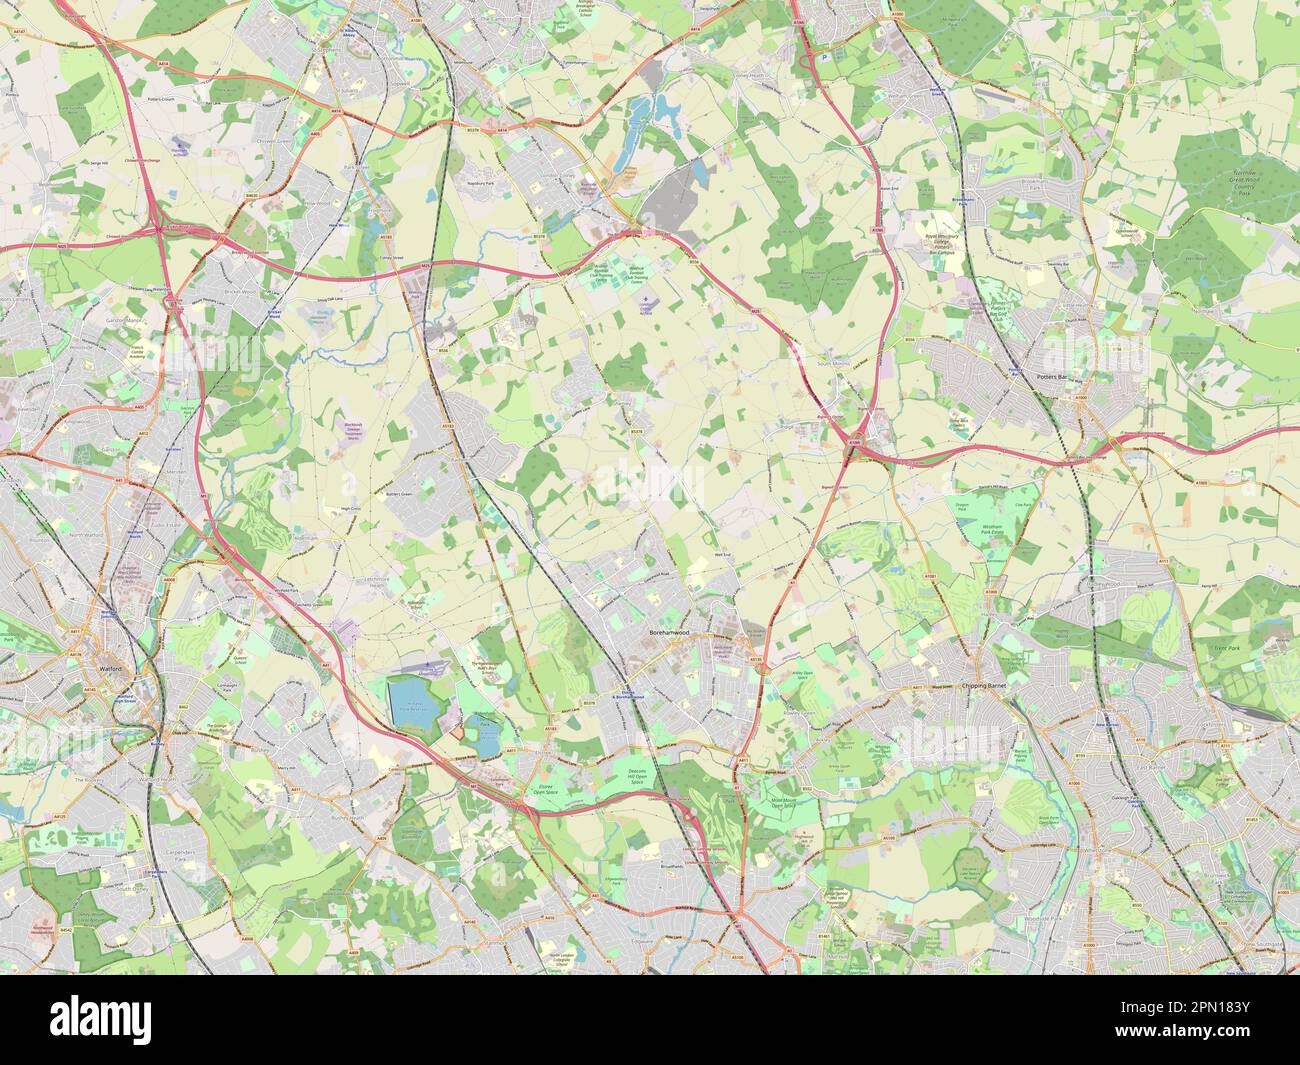 Hertsmere, non metropolitan district of England - Great Britain. Open Street Map Stock Photo